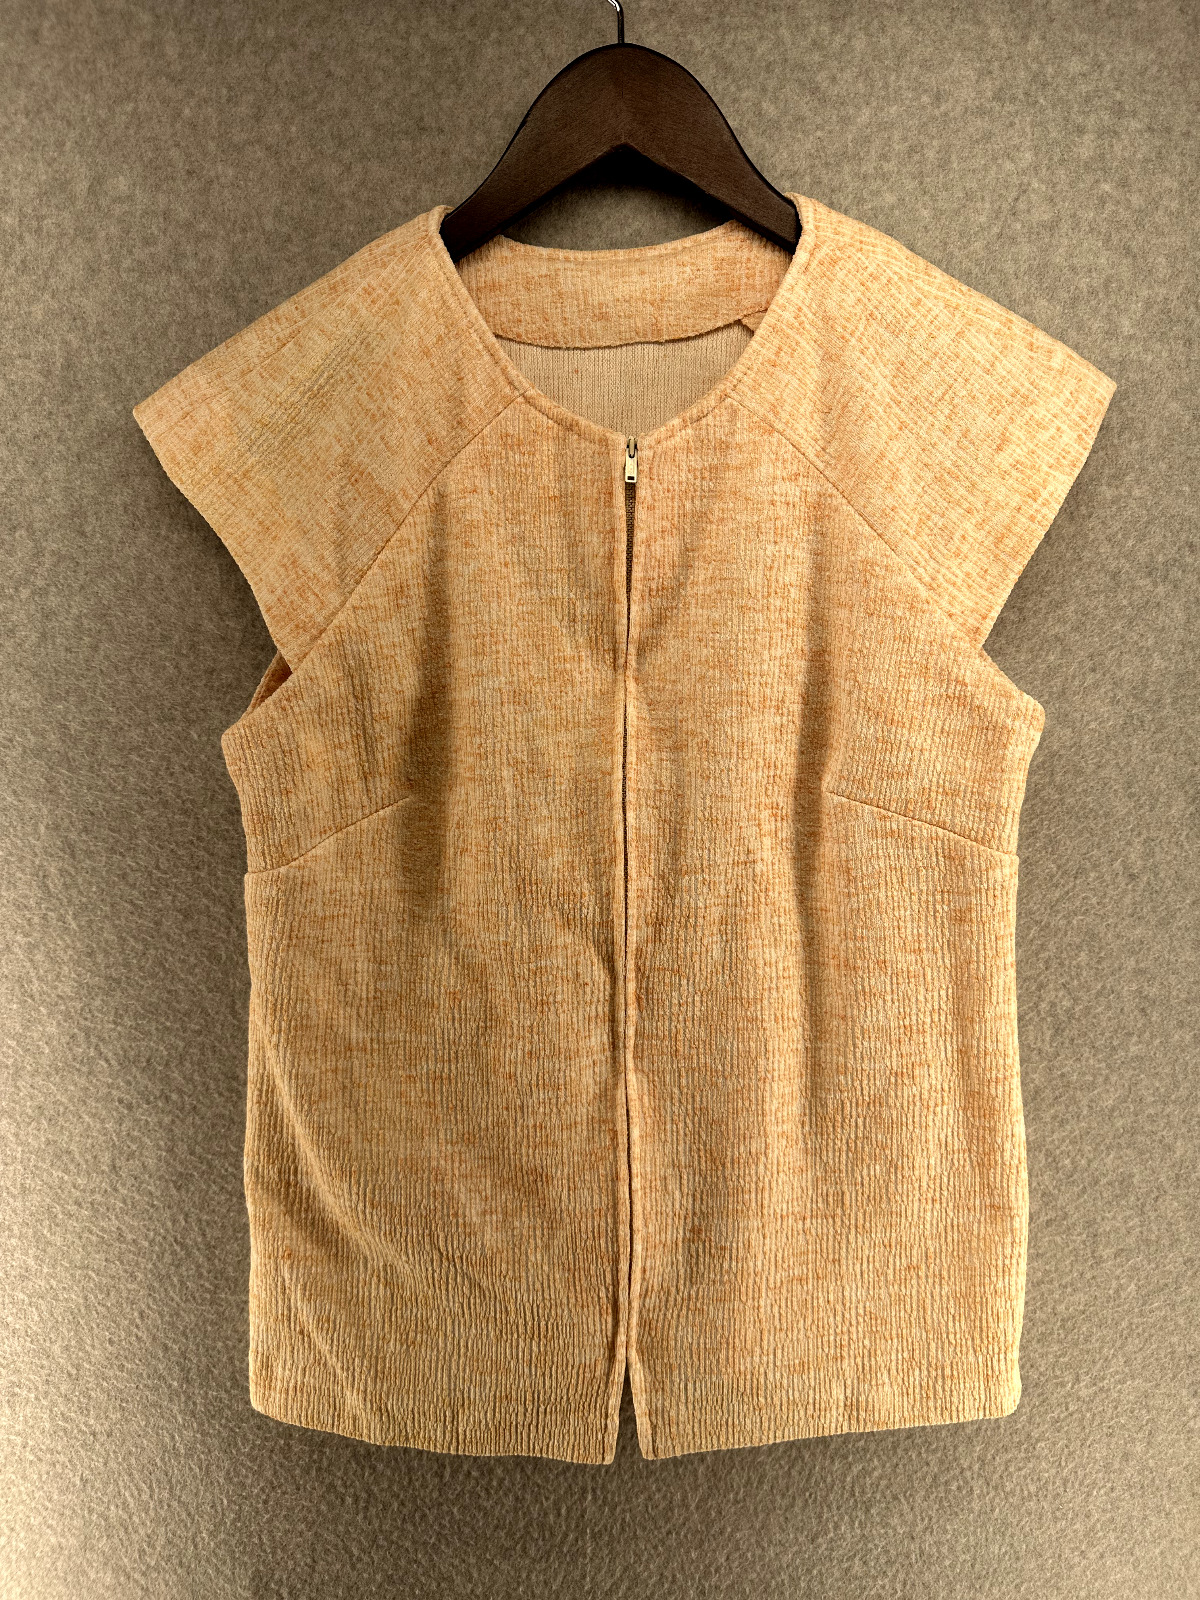 Handmade 70s Vintage Womens Top Knit Size Small (See Pics) Full Zip Cream Orange